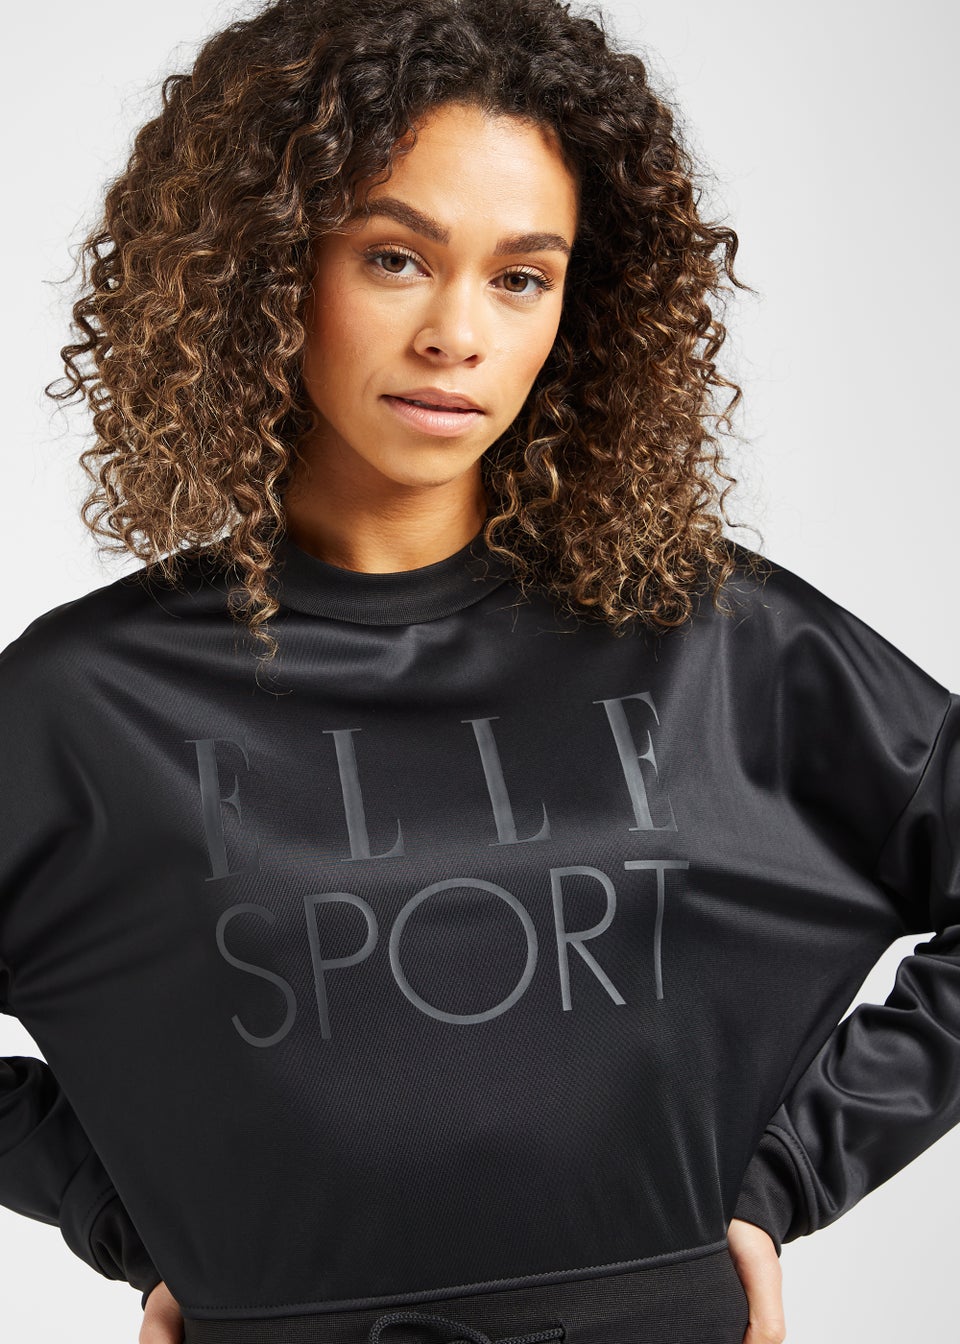 Elle Sport Black Cropped Sweatshirt